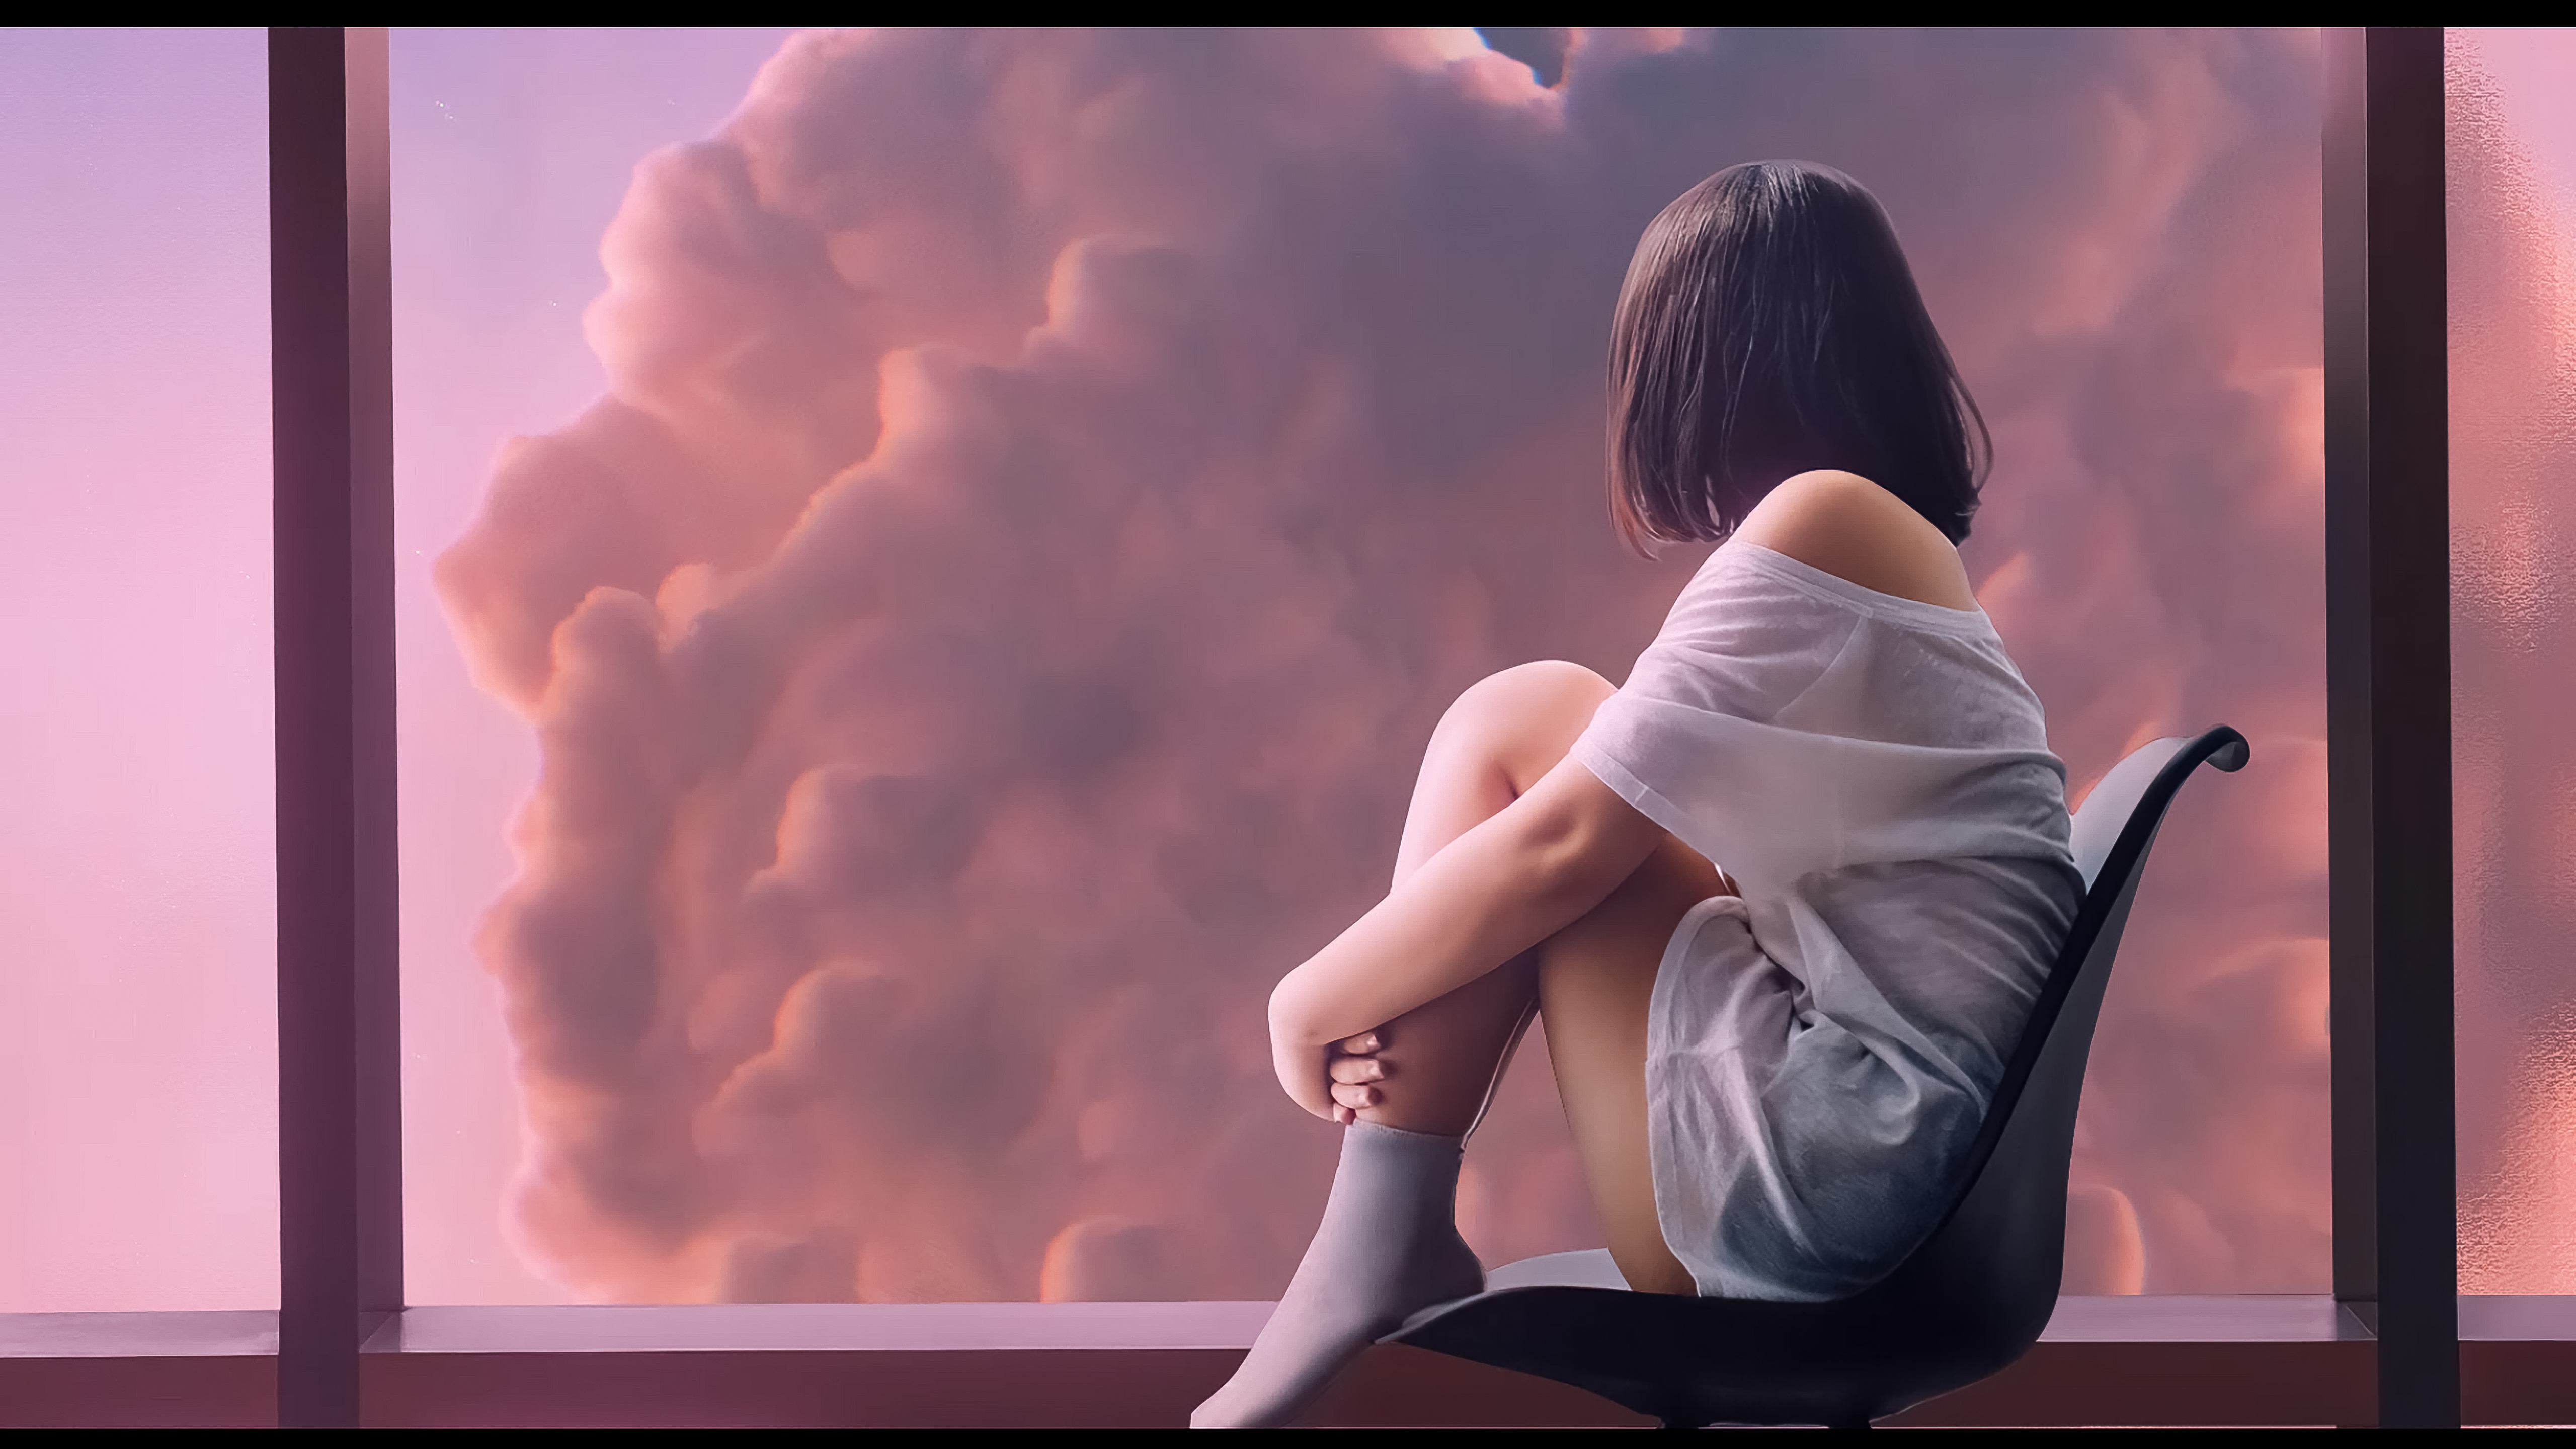 Looking Away Alone Fantasy Girl Clouds Window Frames Socks 5120x2880